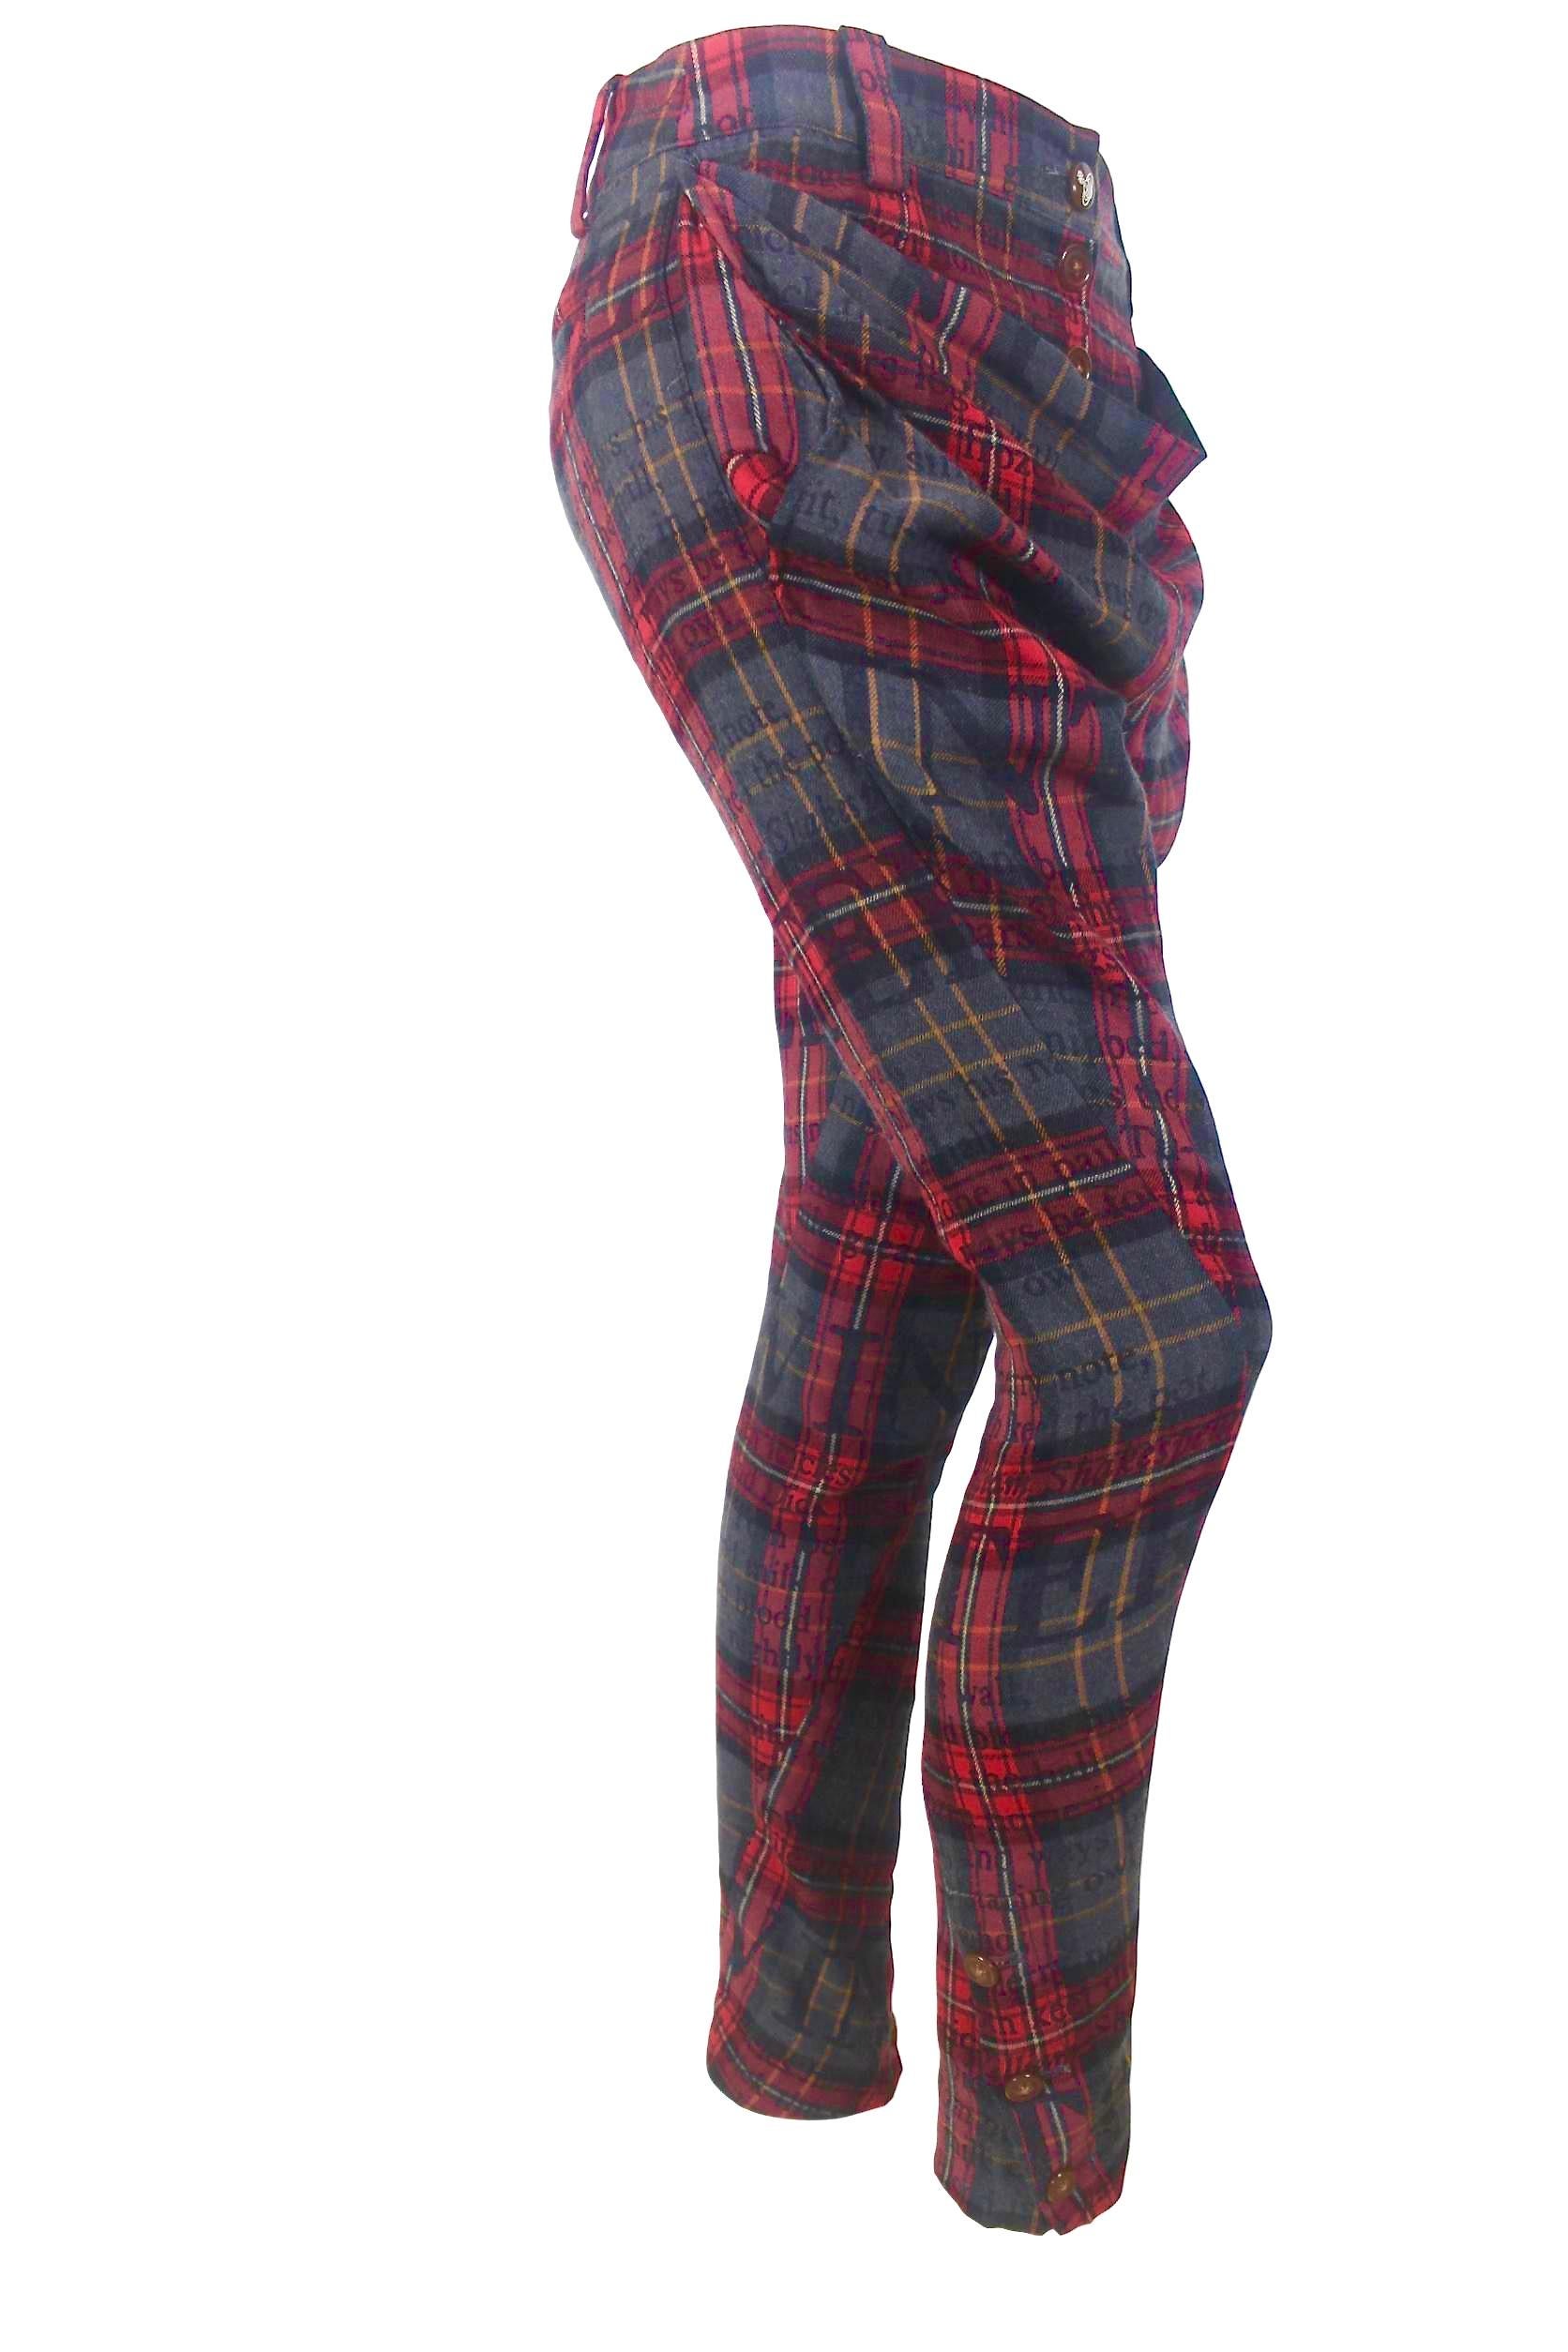 Vivienne Westwood Red Label Twisted Leg Tartan Trousers 6